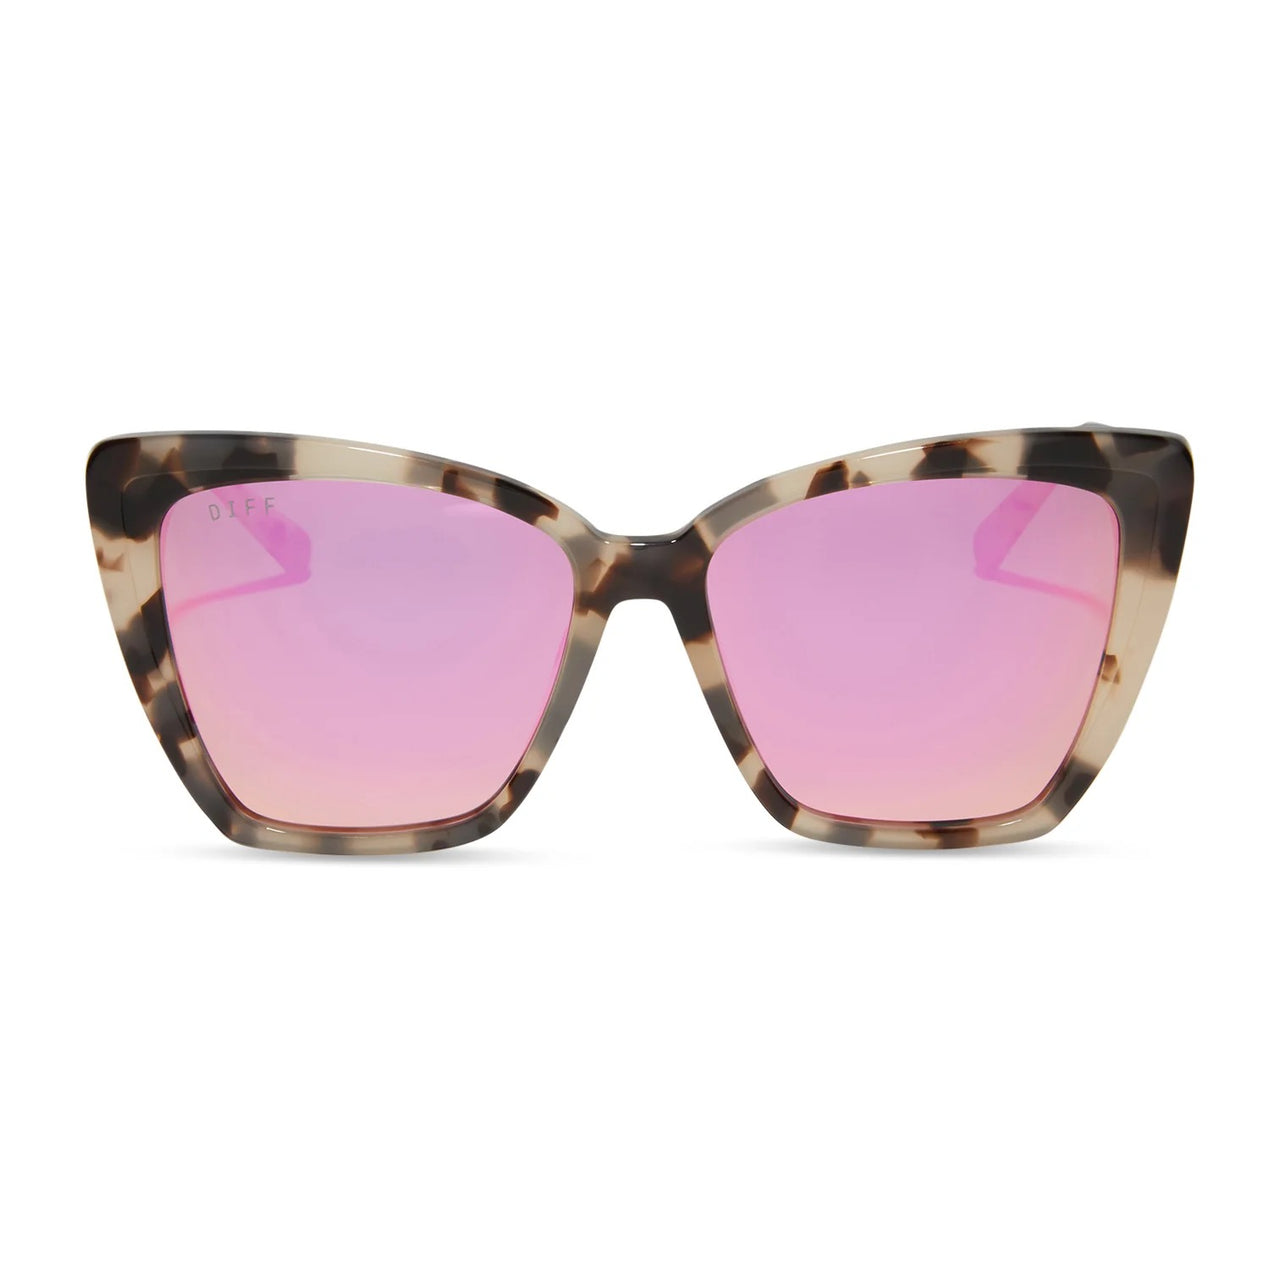 {DIFF} Becky ii - cream tortoise + pink mirror sunglasses